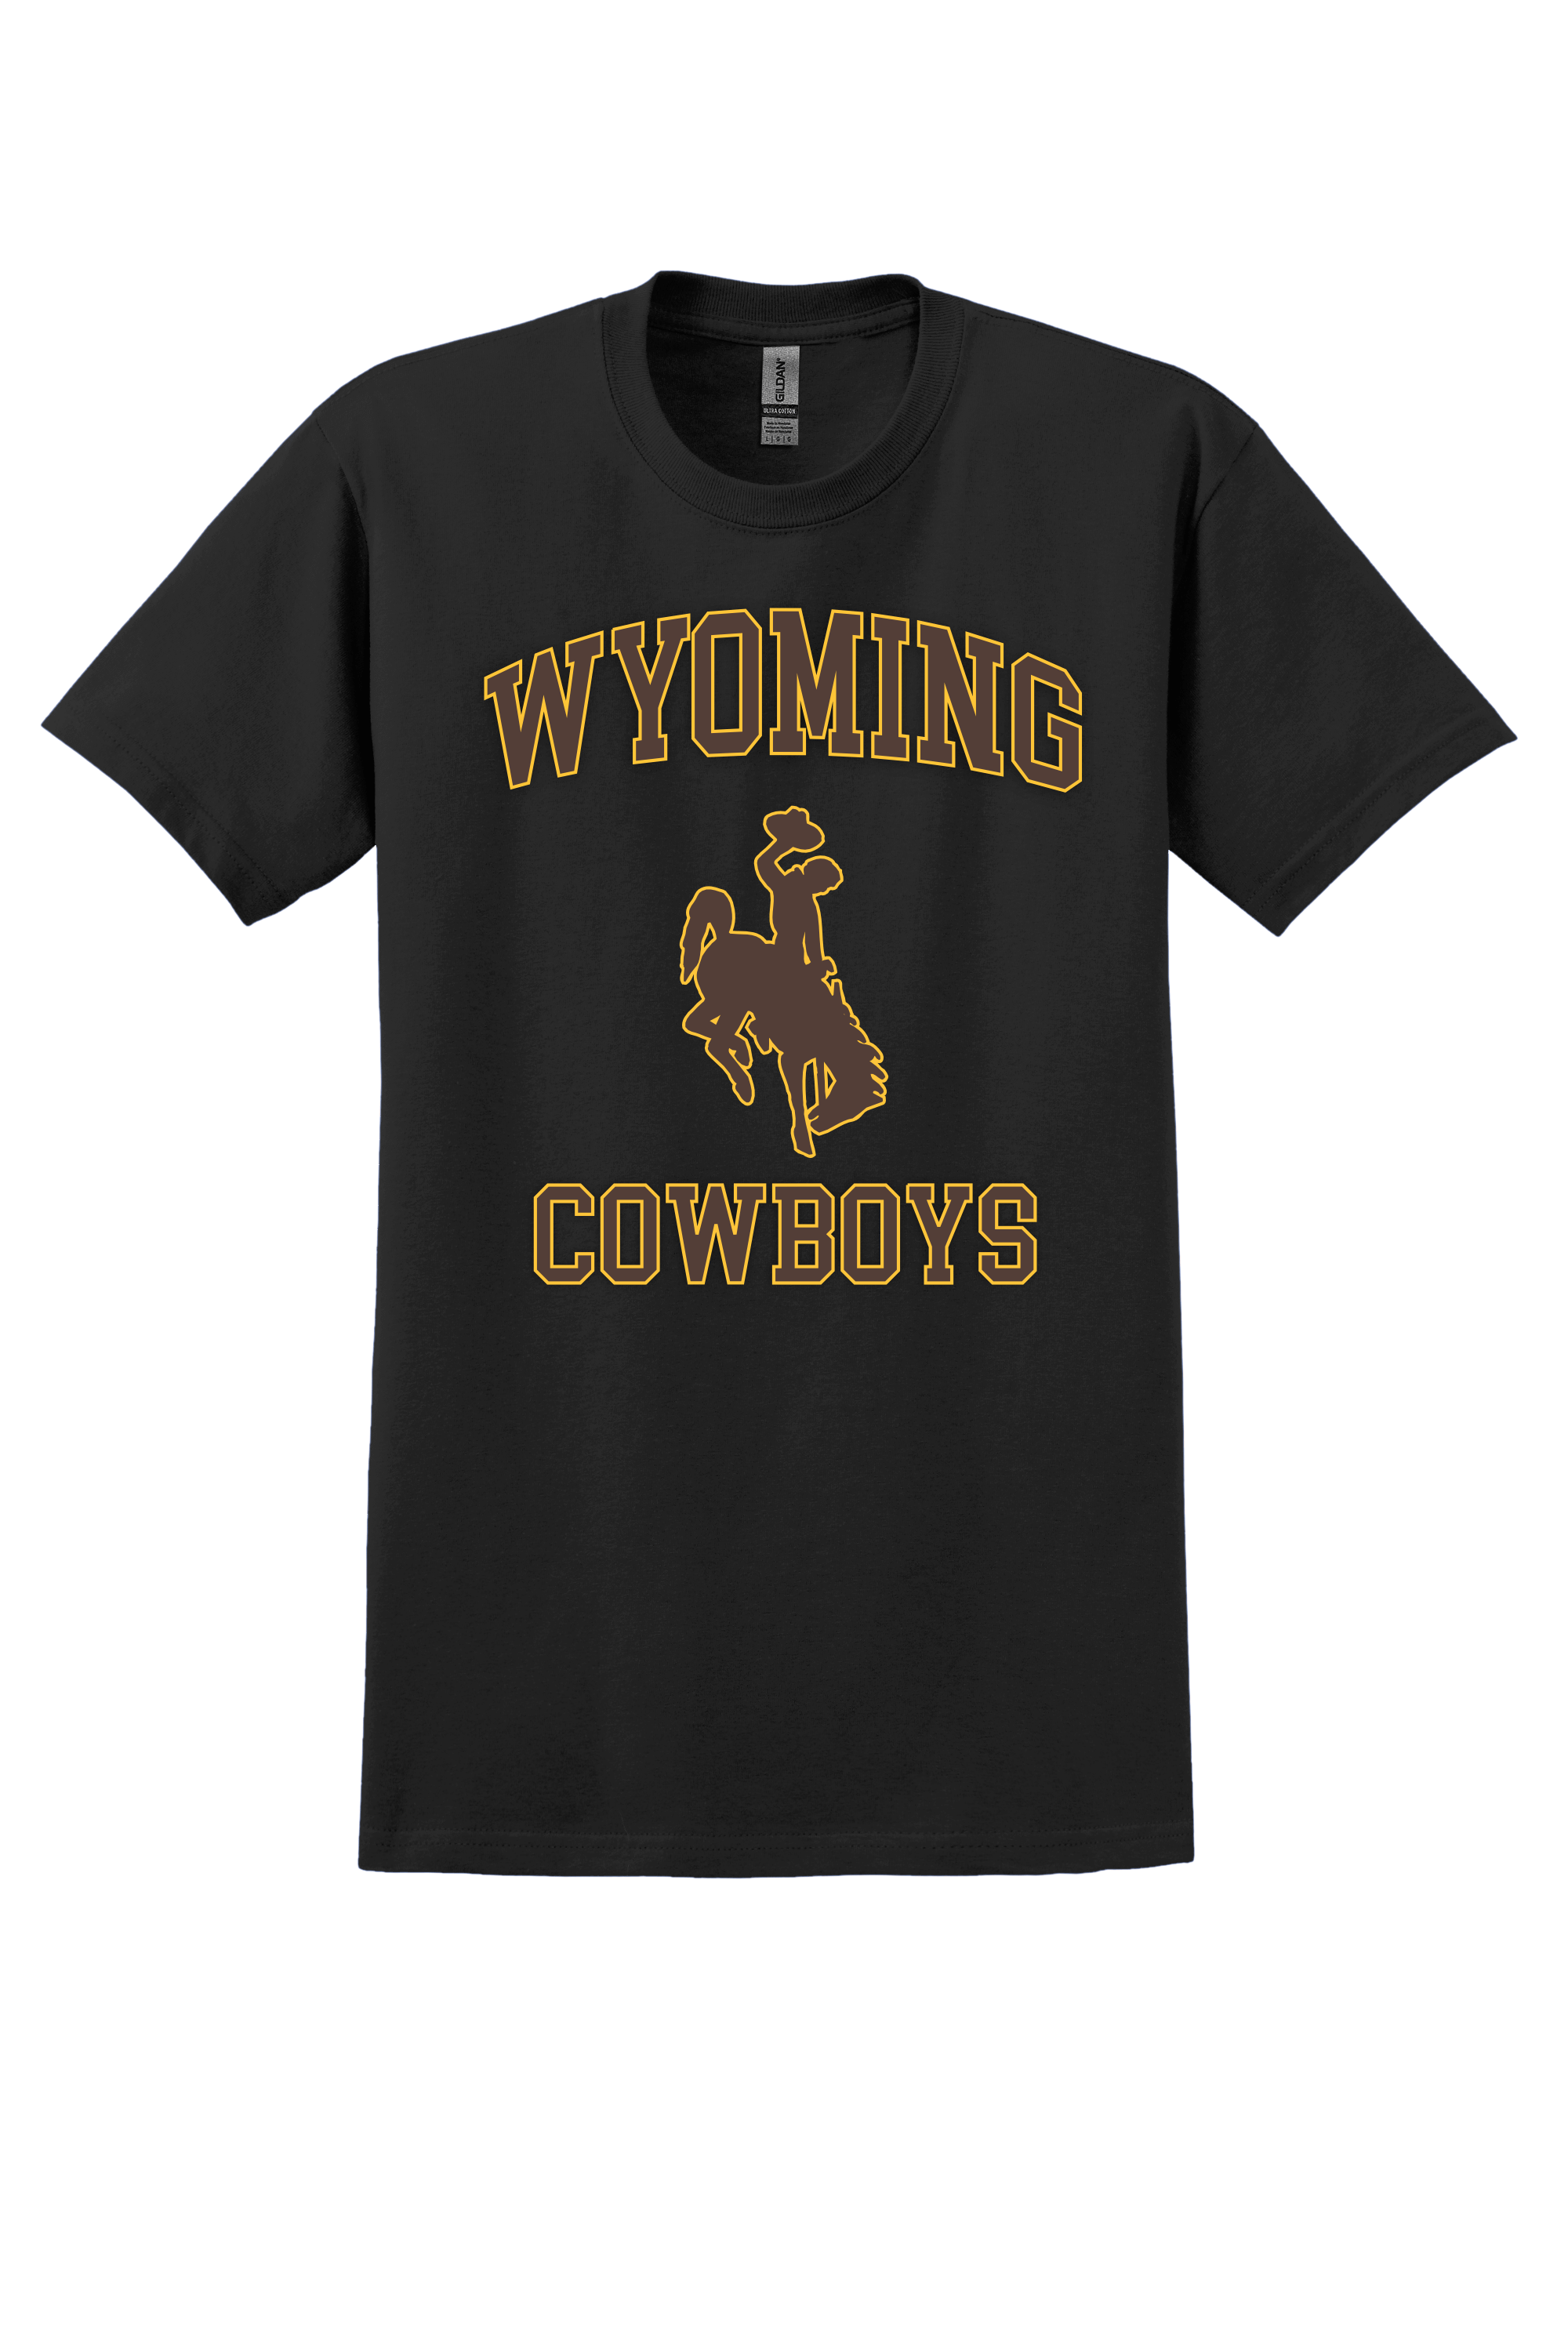 Wyoming Cowboys T-shirt- Black